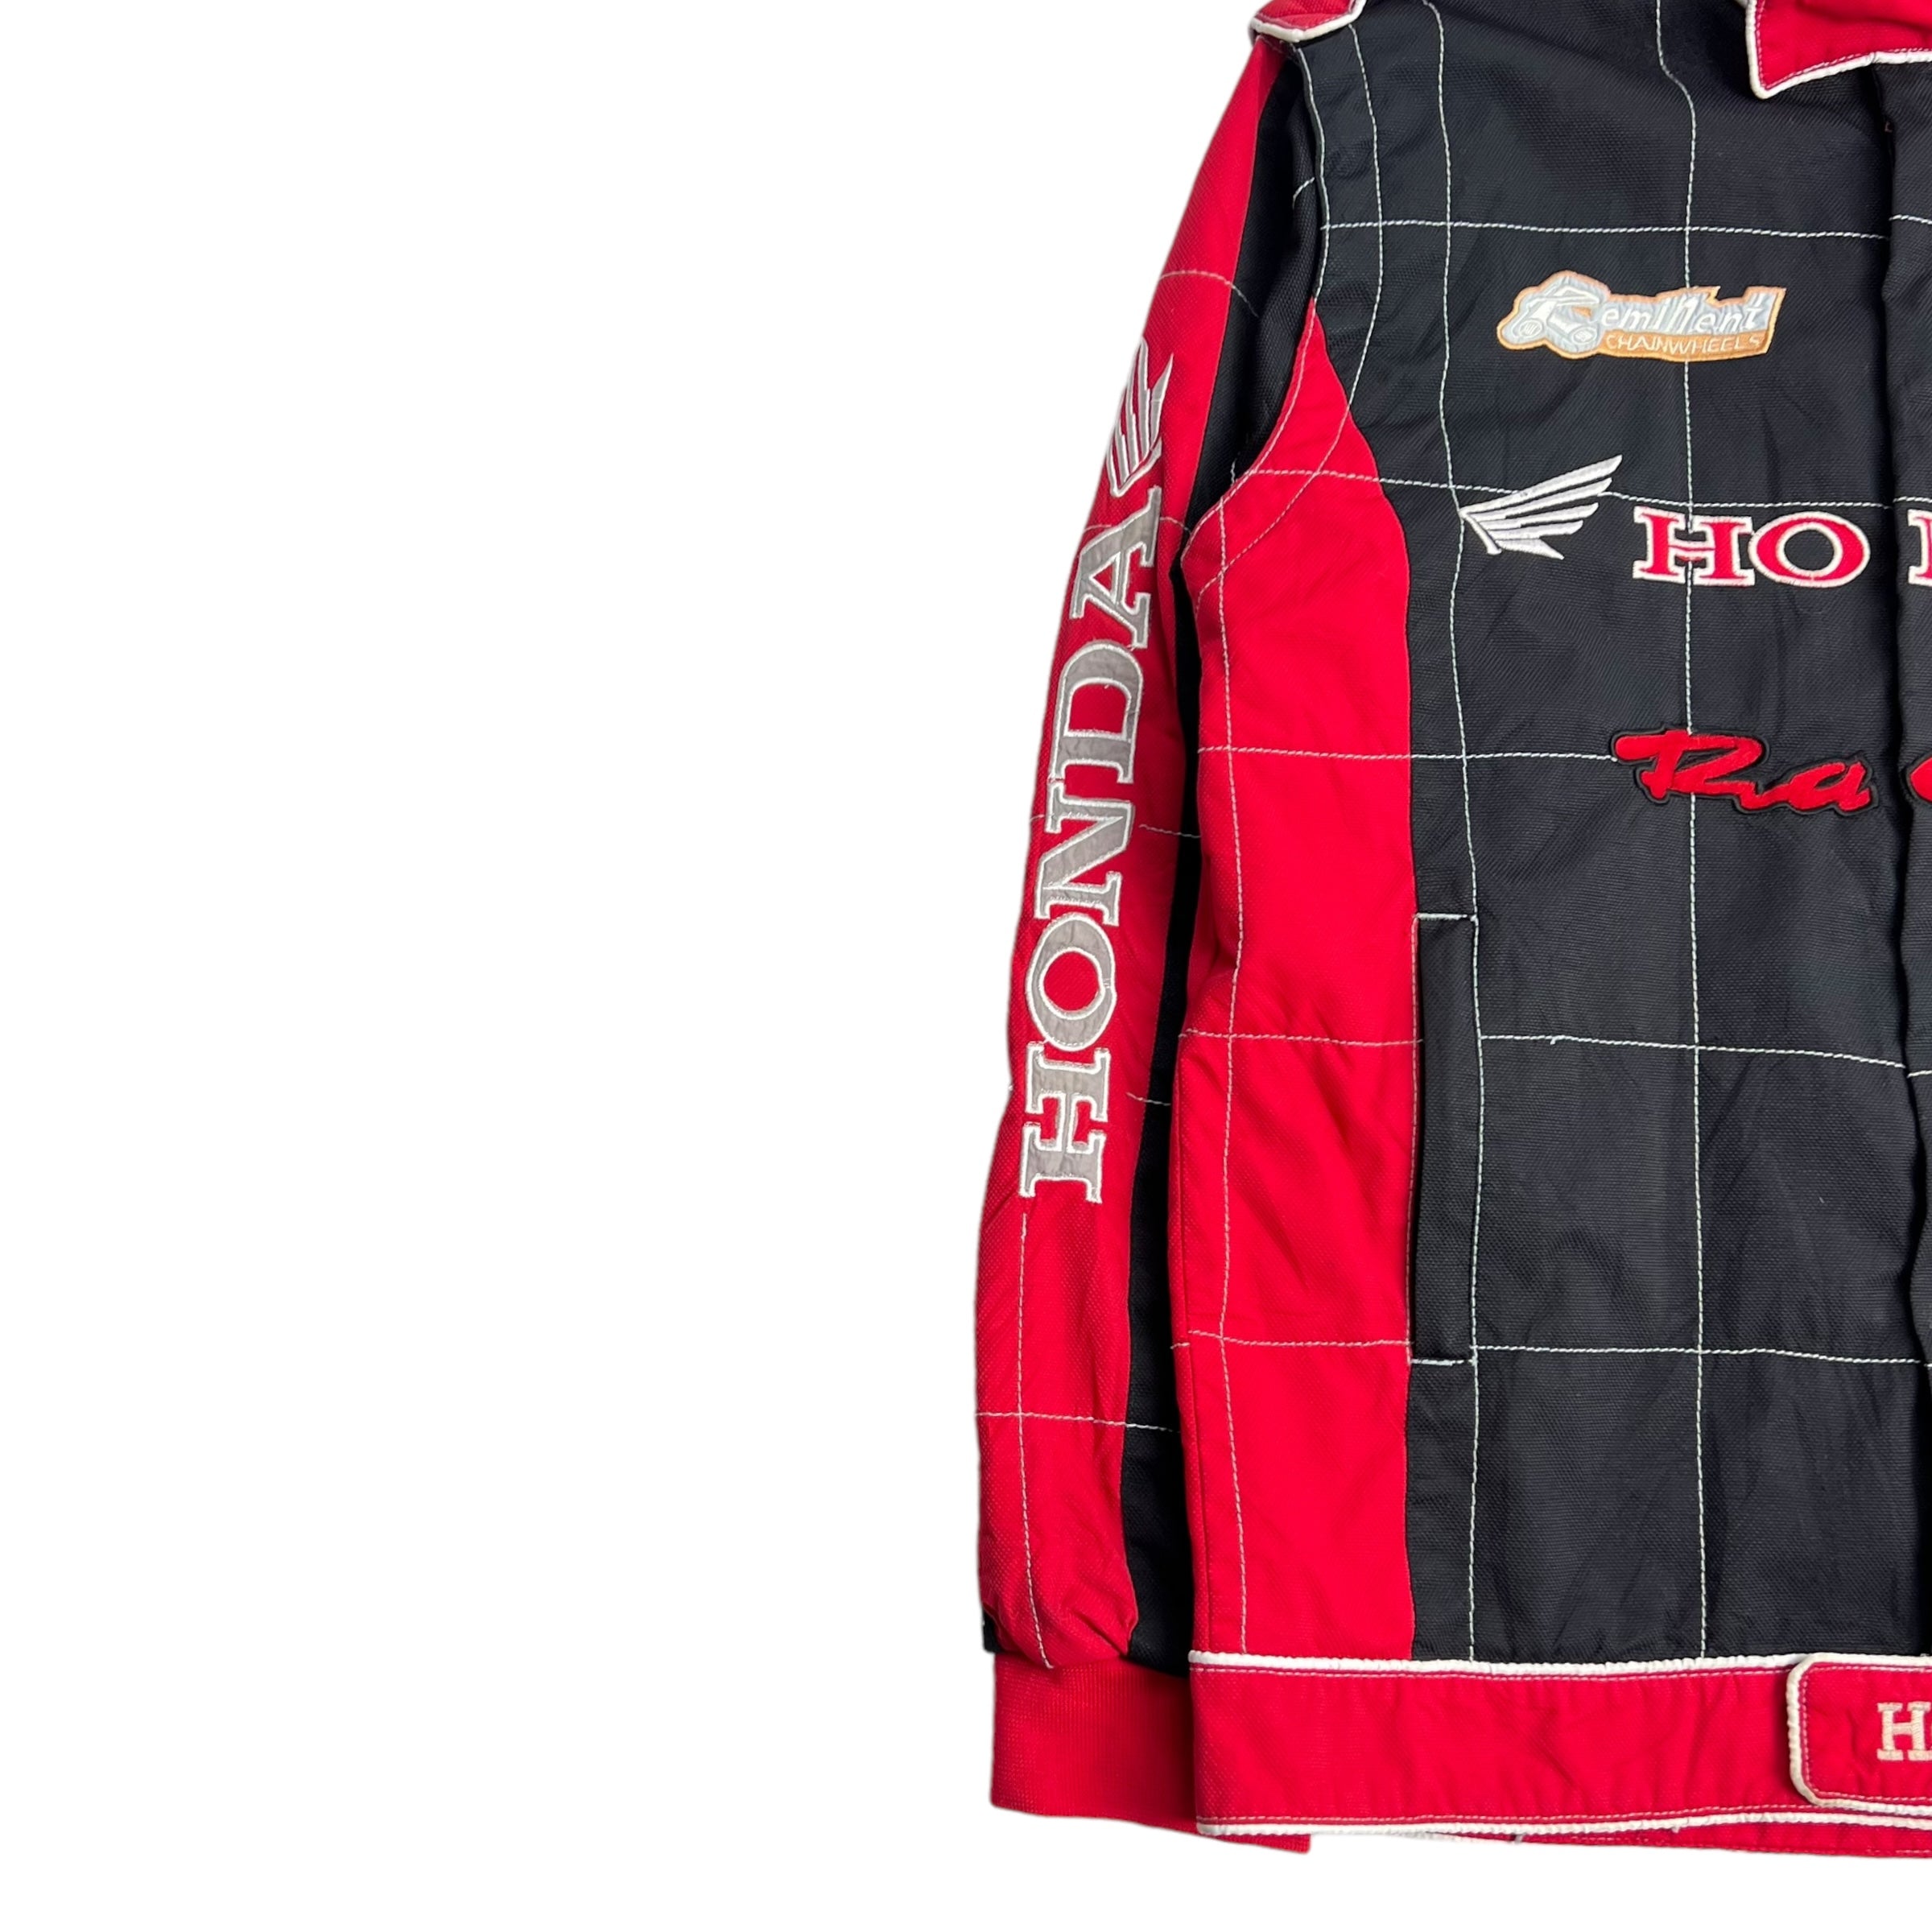 Vintage F1 Michael Schumacher Honda Racing Jacket Black